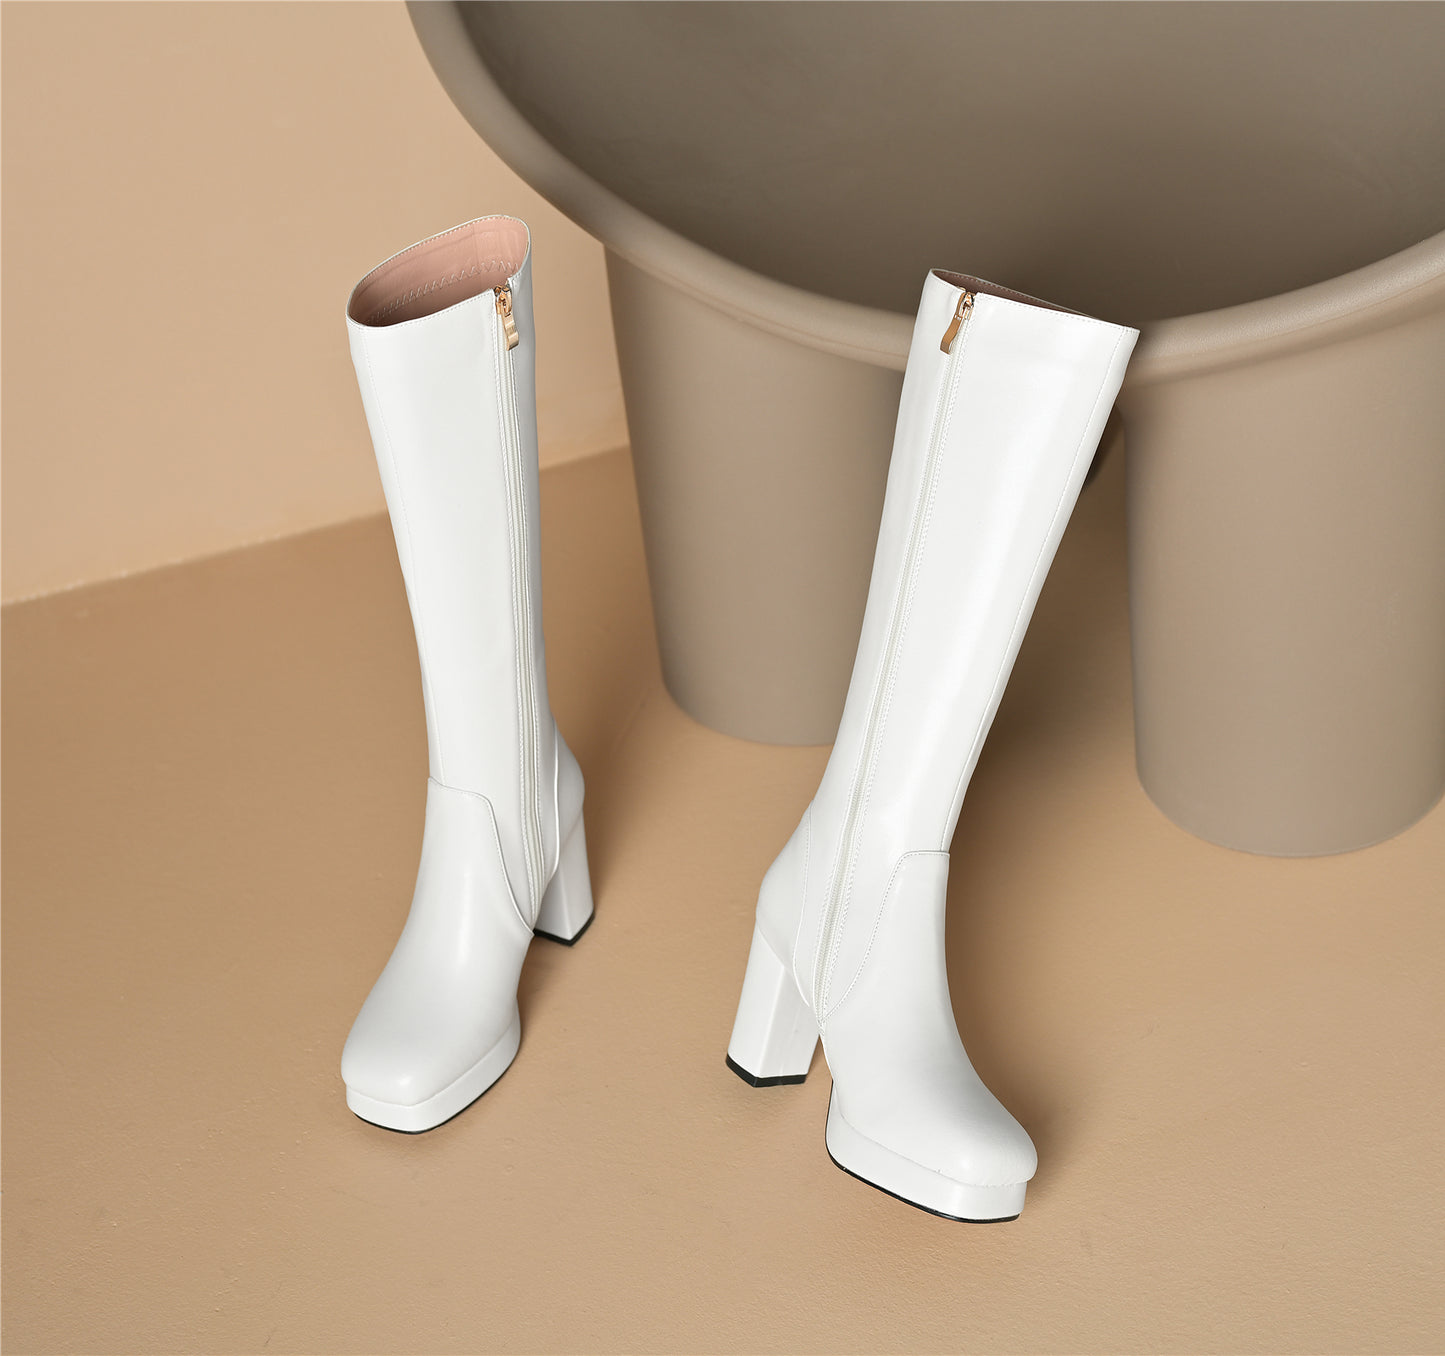 TinaCus Women's Square Toe Platform Genuine Leather Handmade Side Zip High Heels Knee High Boots